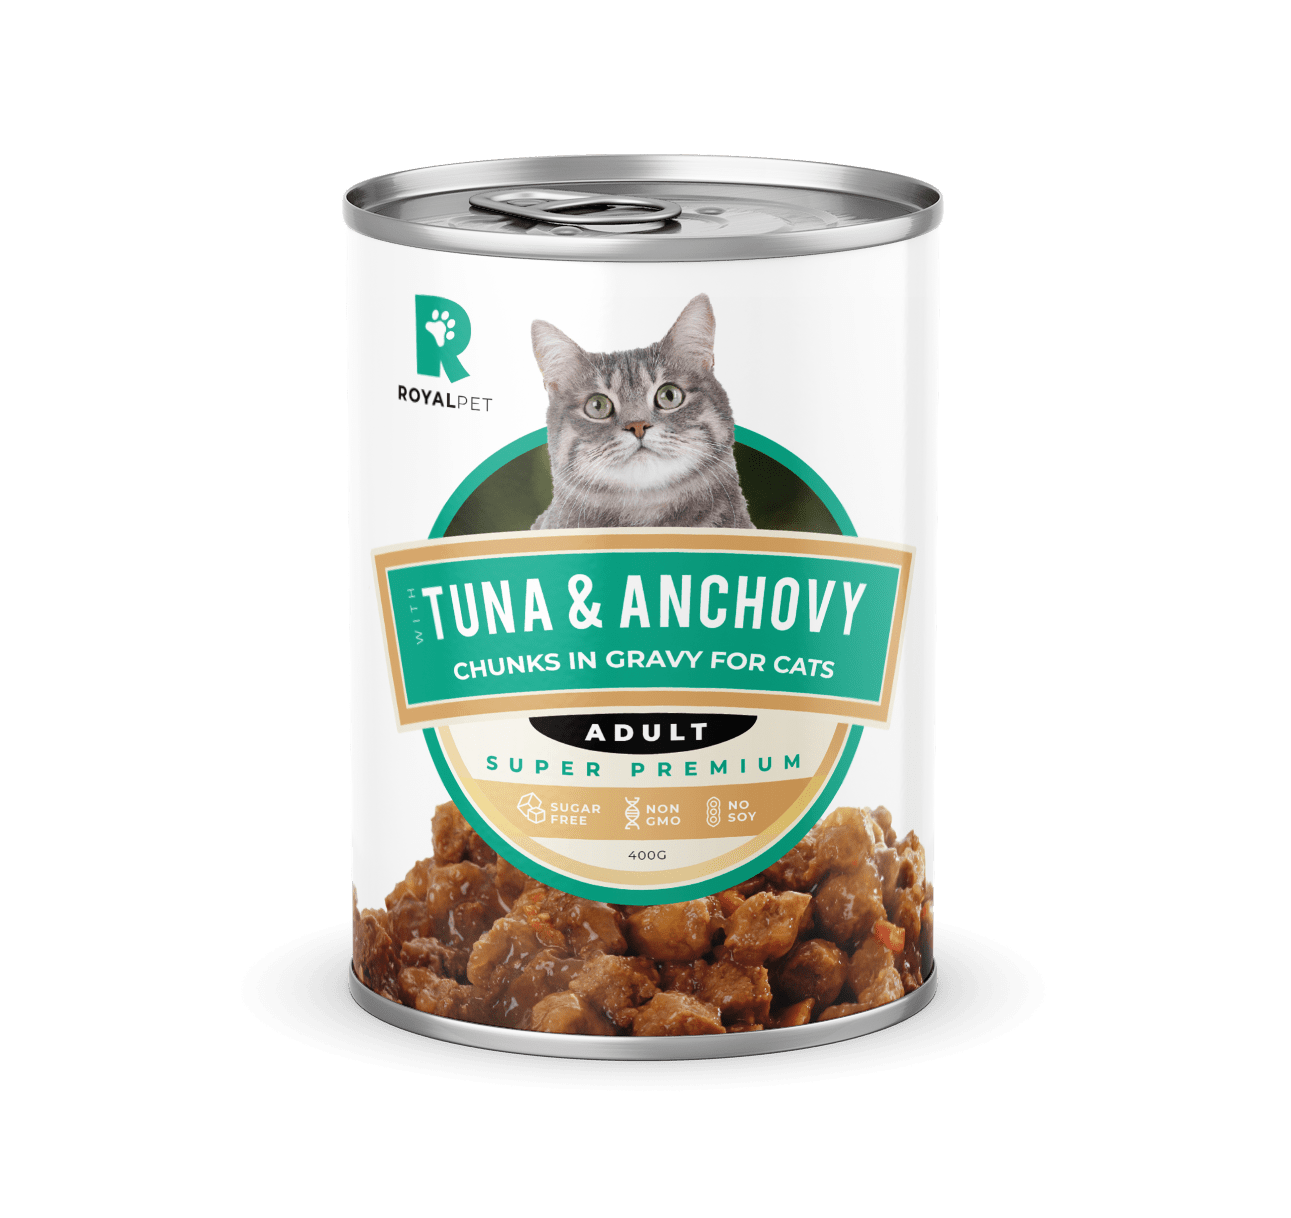 Royal pet tuna & anchovy chunk adult cat 400g